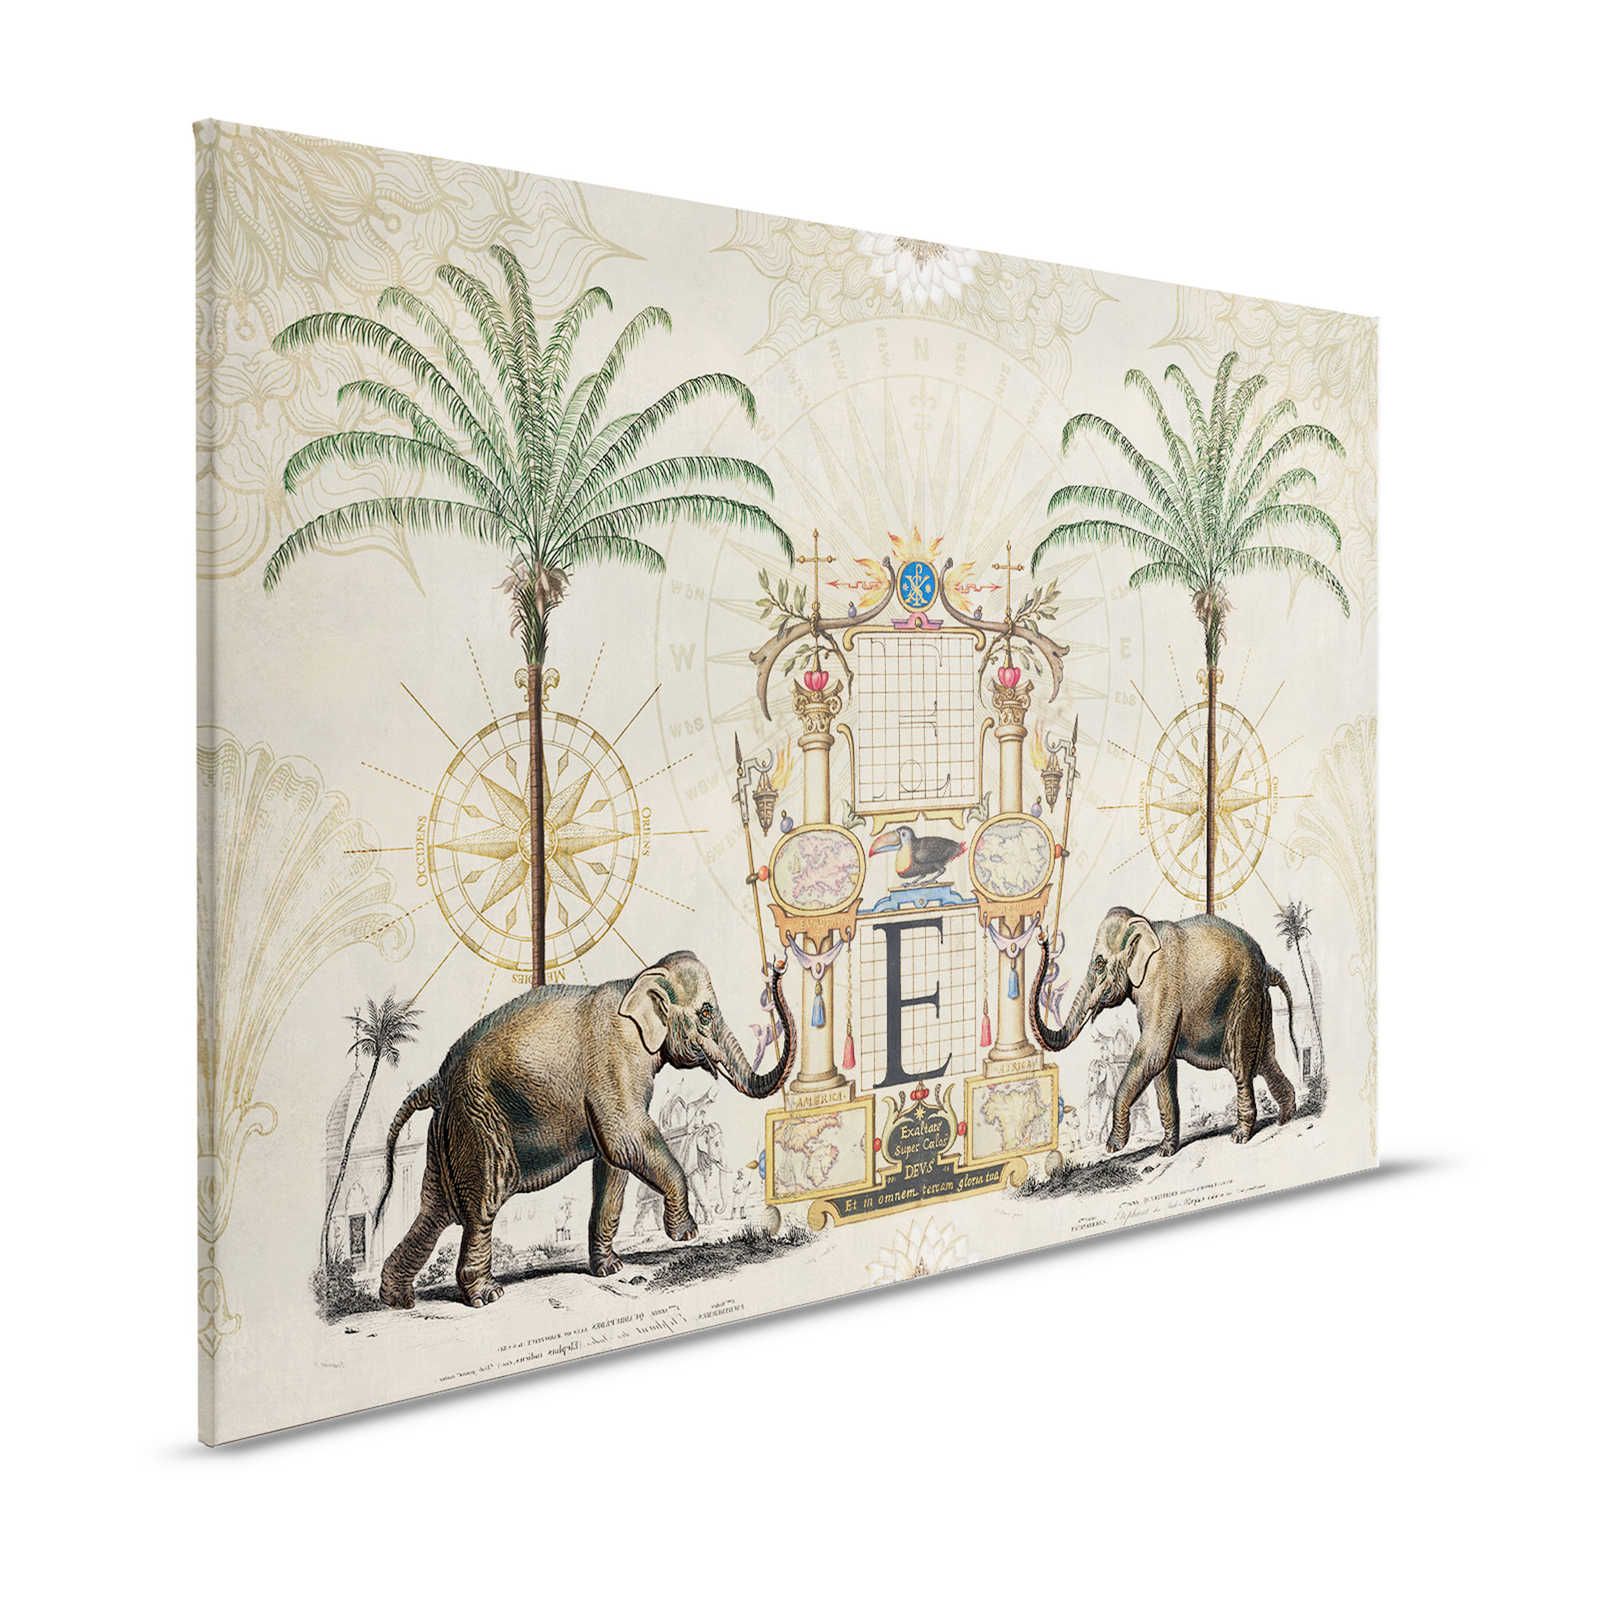 Nostalgia Canvas Painting with Vintage Elephant Pattern - 1.20 m x 0.80 m
